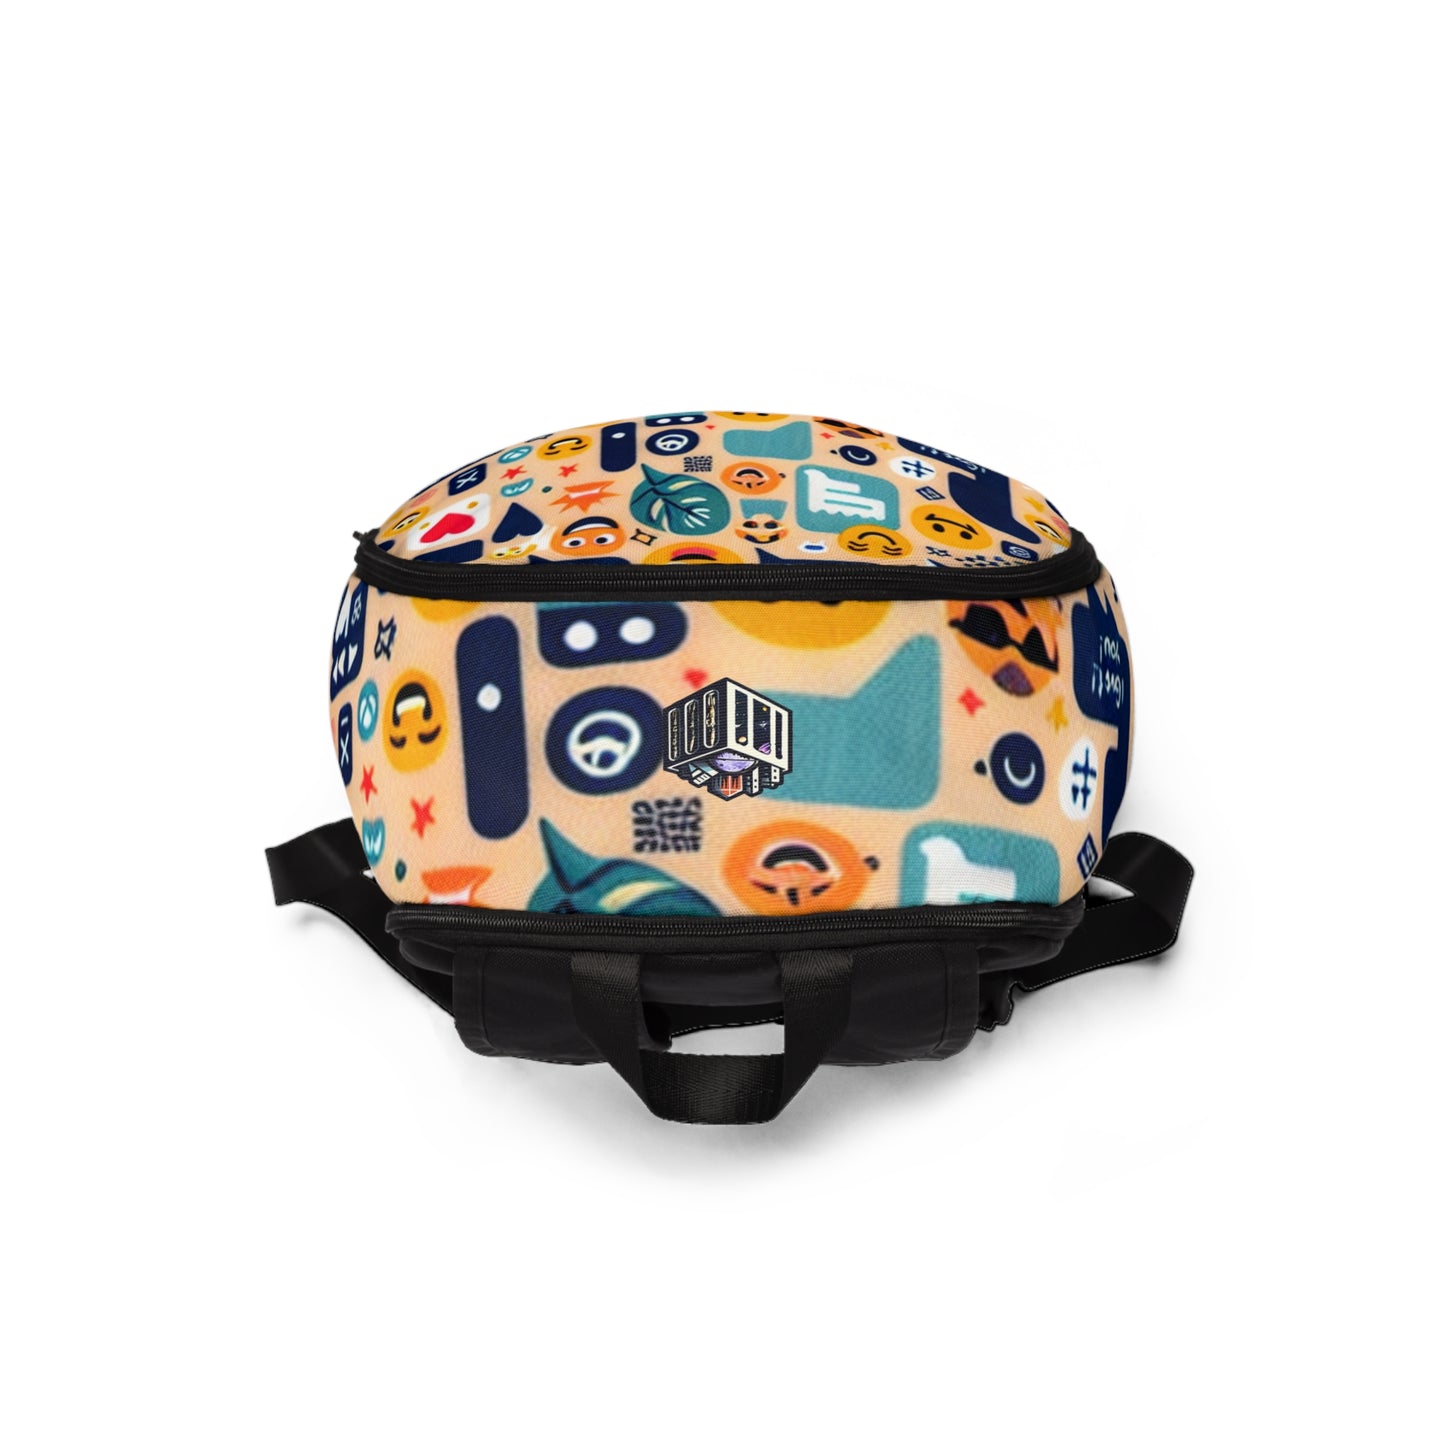 OmiK Pack - Laptop Backpack Rucksack Bag for Men Women, Water Resistant